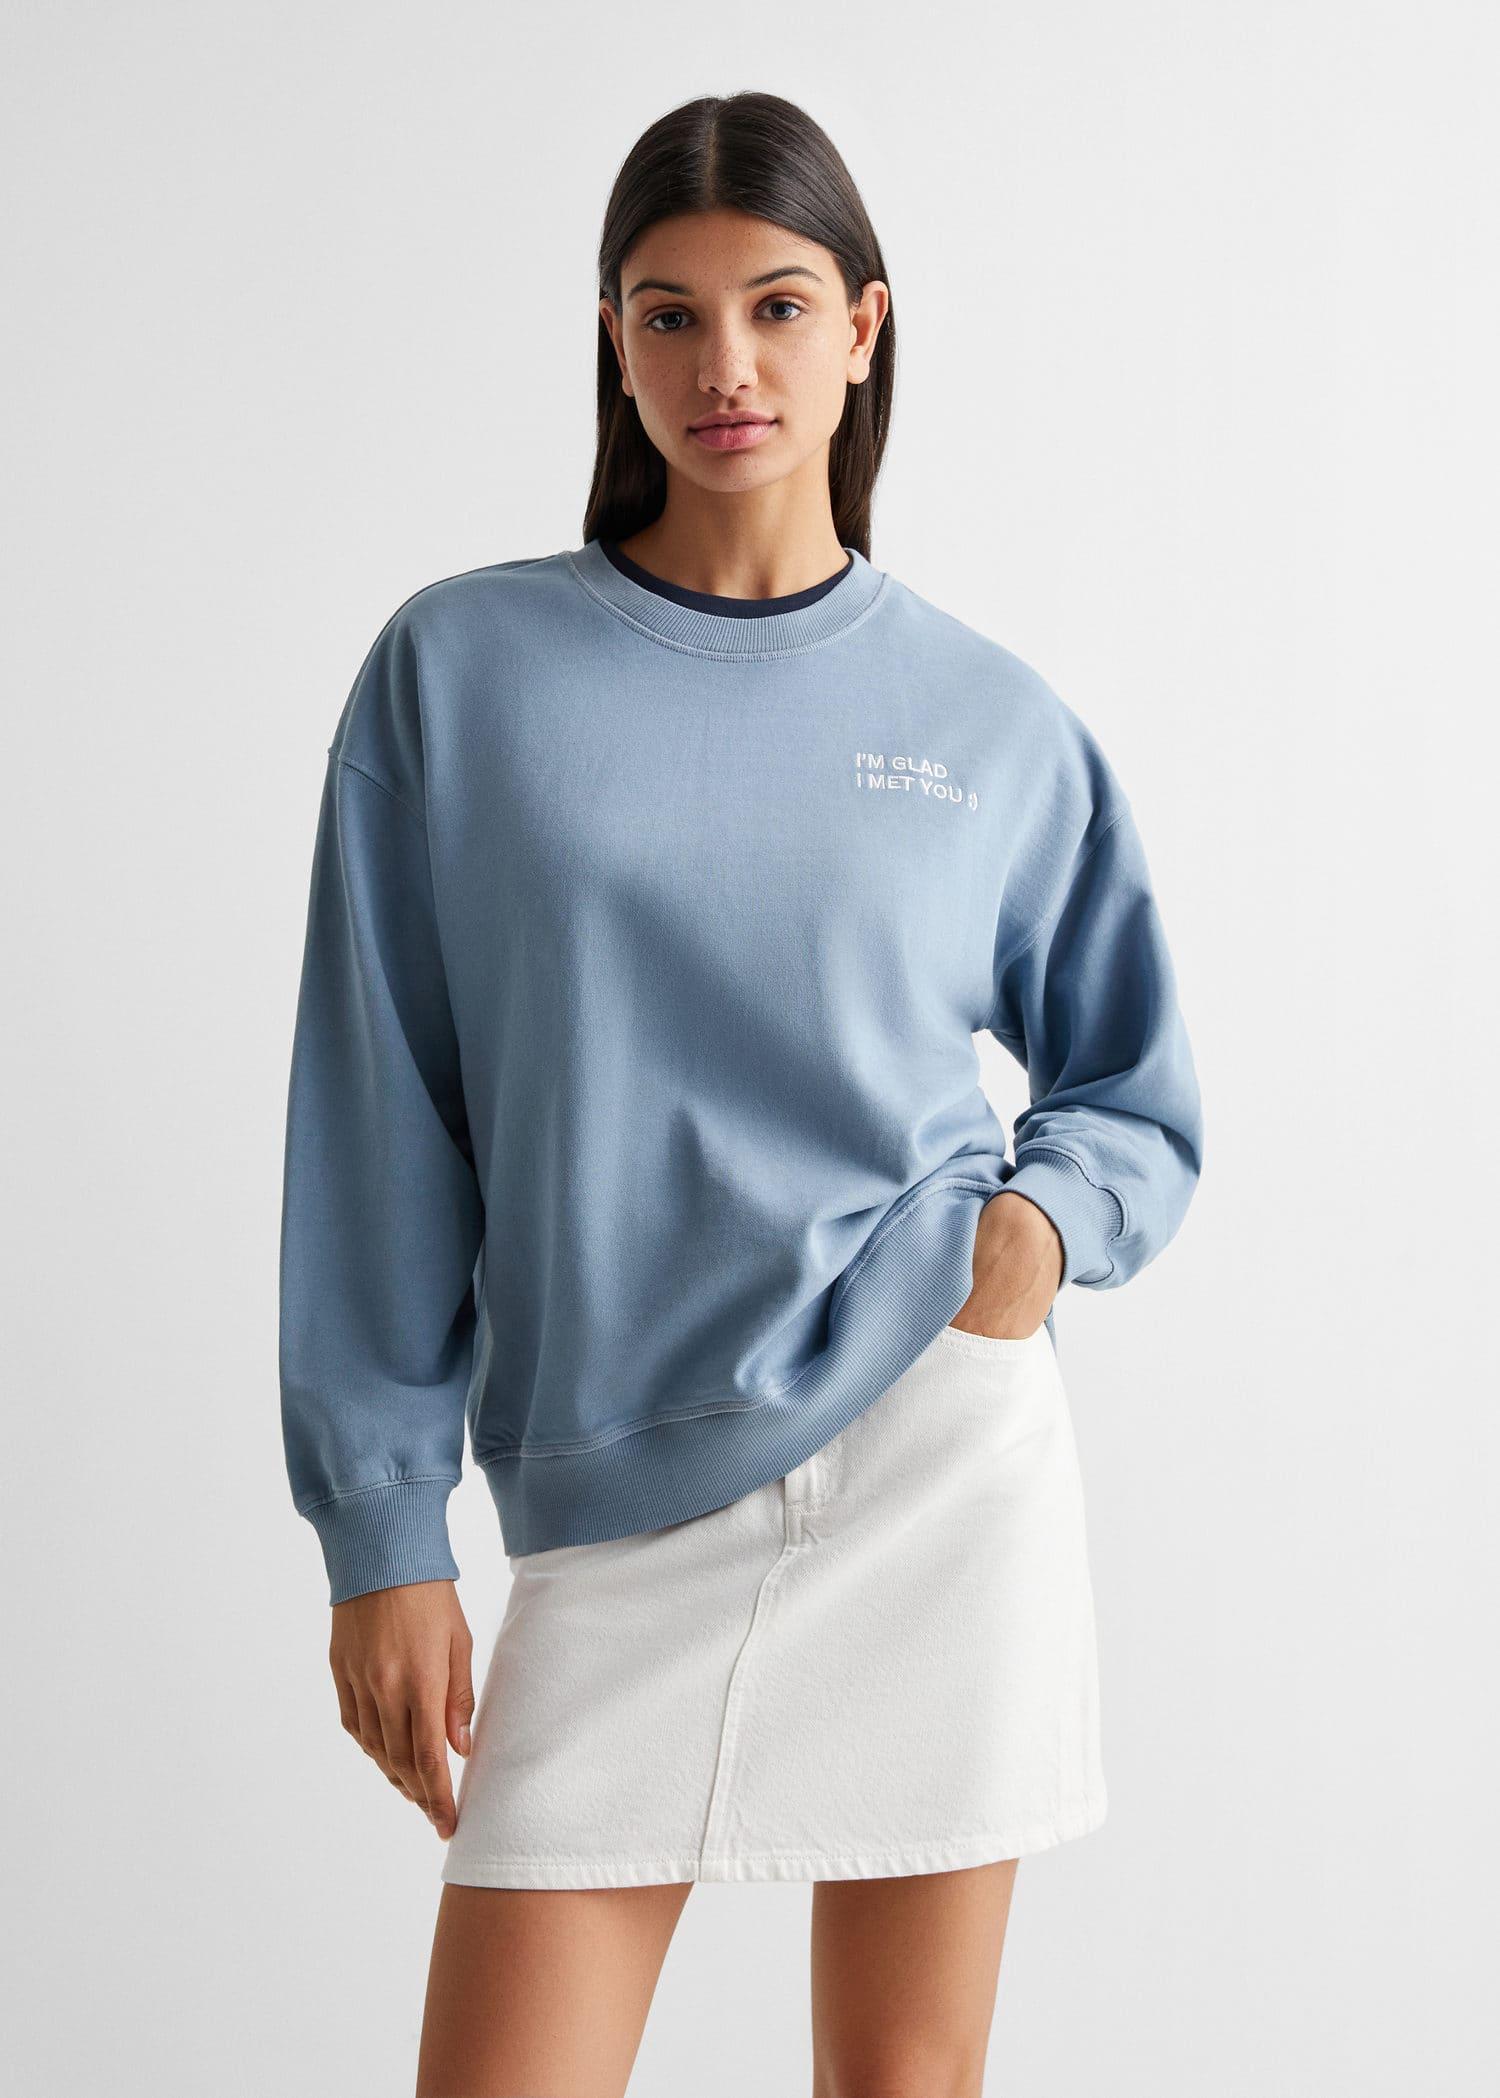 embroidered-message-sweatshirt